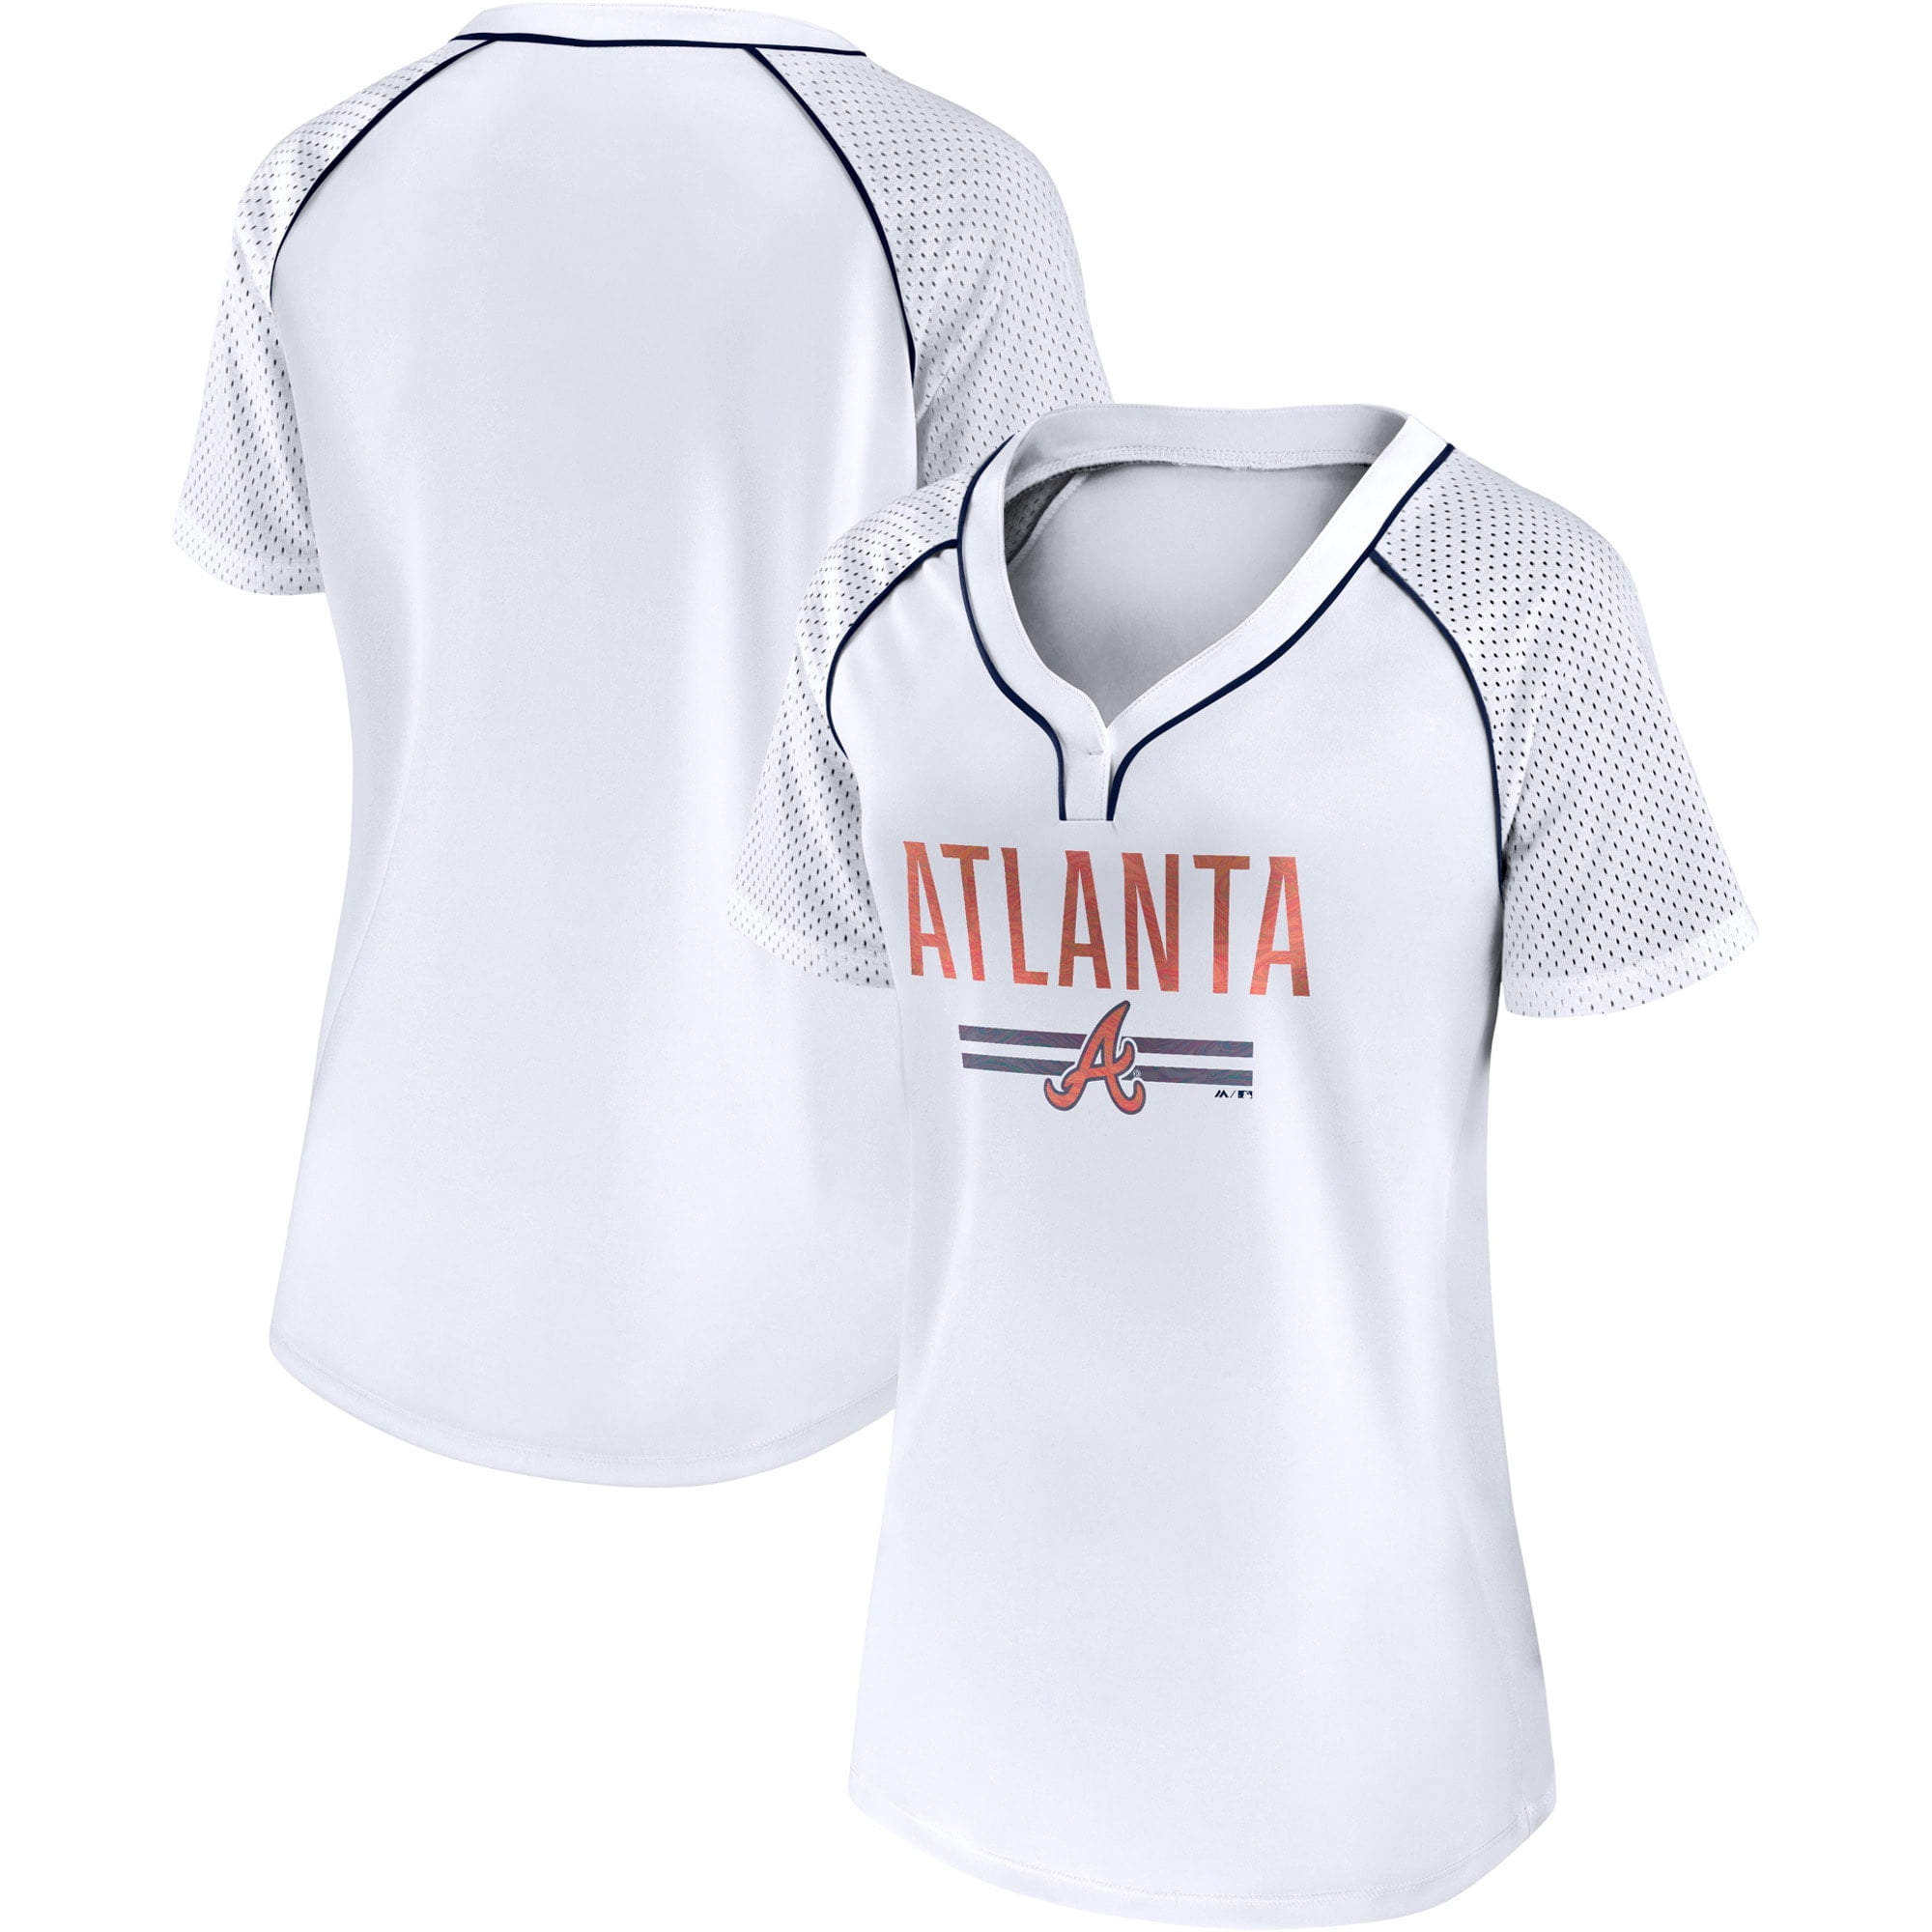 Women's Fanatics Branded White Atlanta Braves Play Calling Raglan